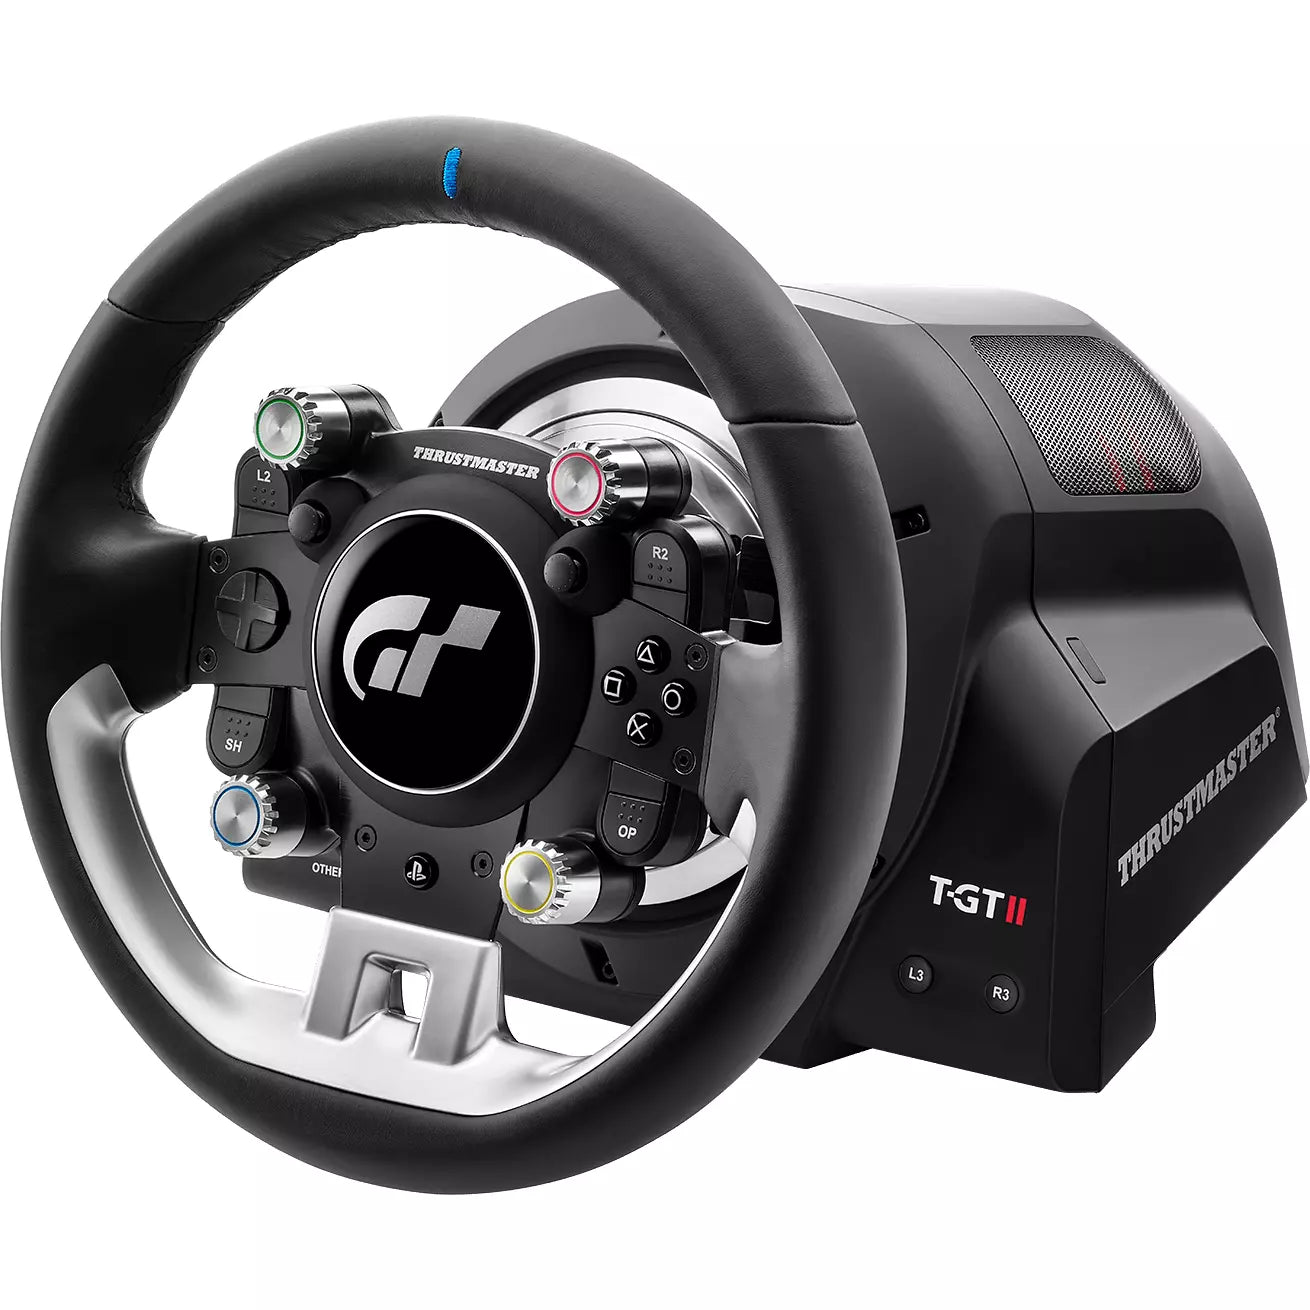 Thrustmaster T-GT II Racing Wheel